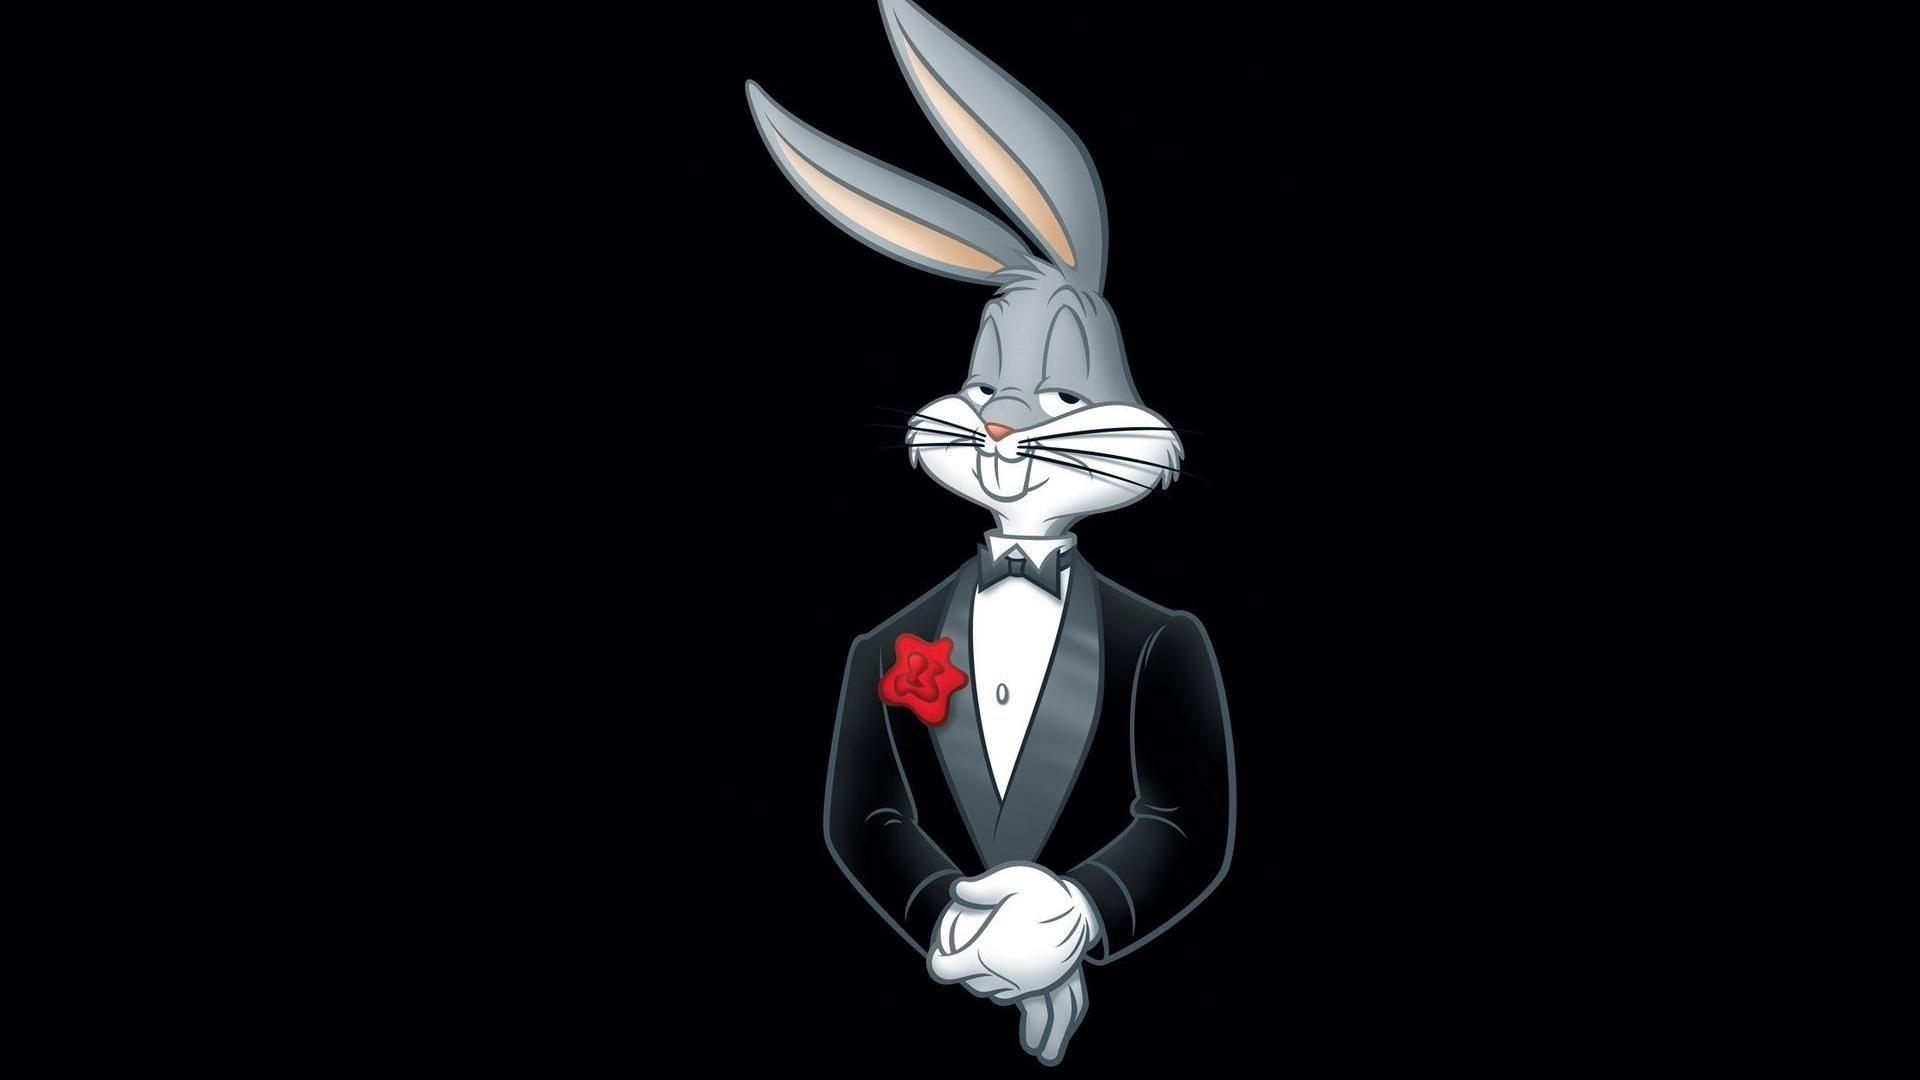 HD Bugs Bunny Wallpapers  PixelsTalkNet